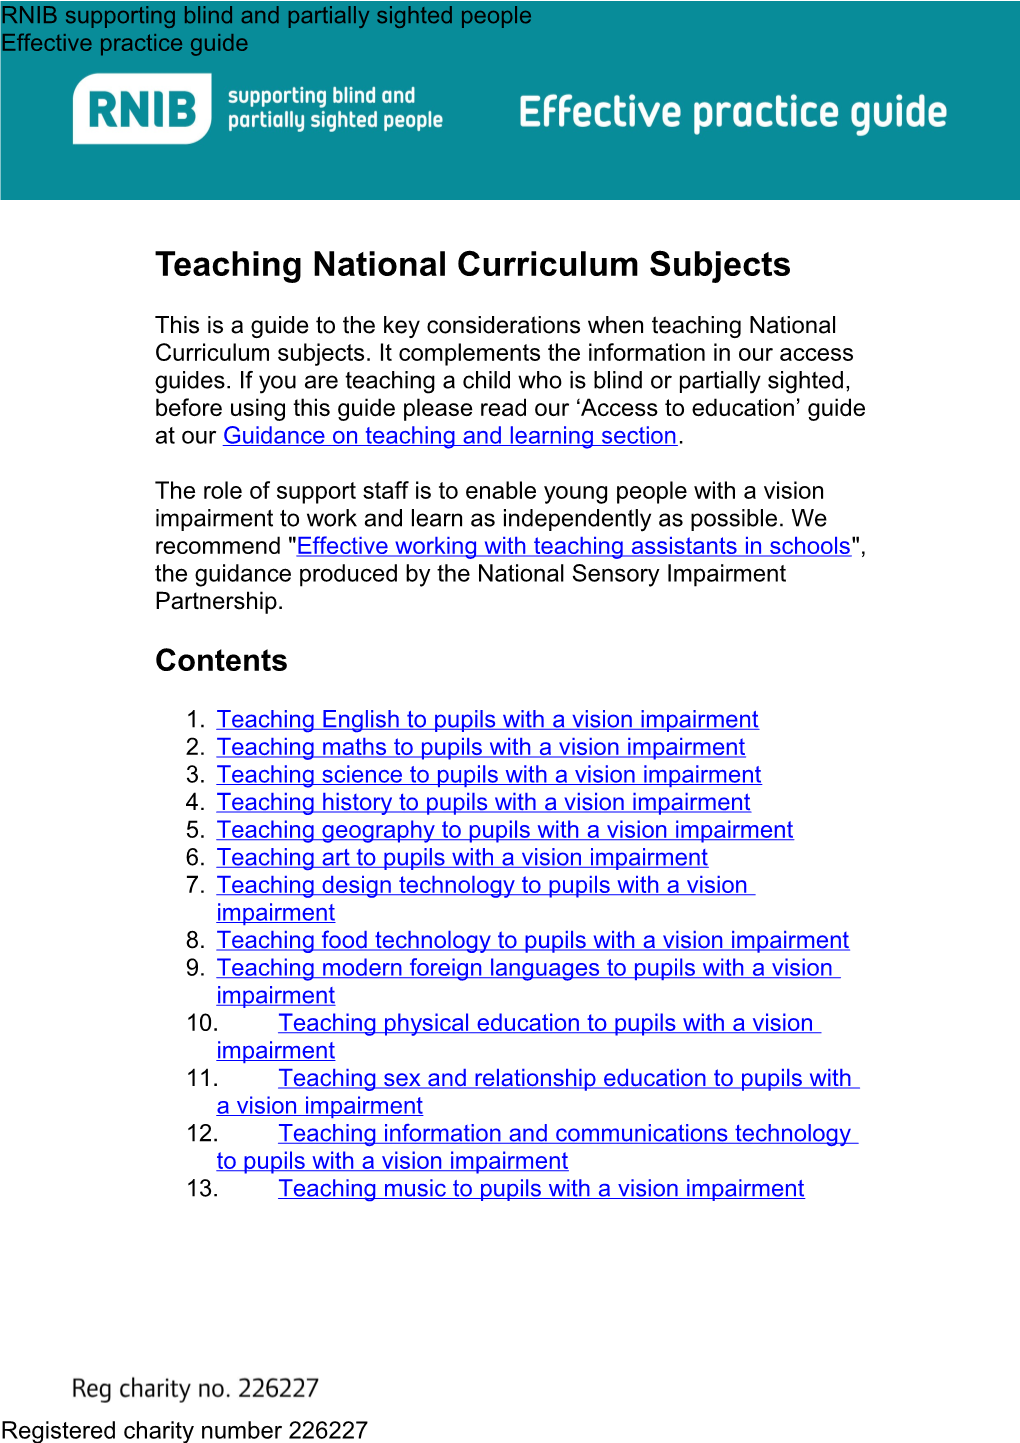 Teaching National Curriculum Subjects